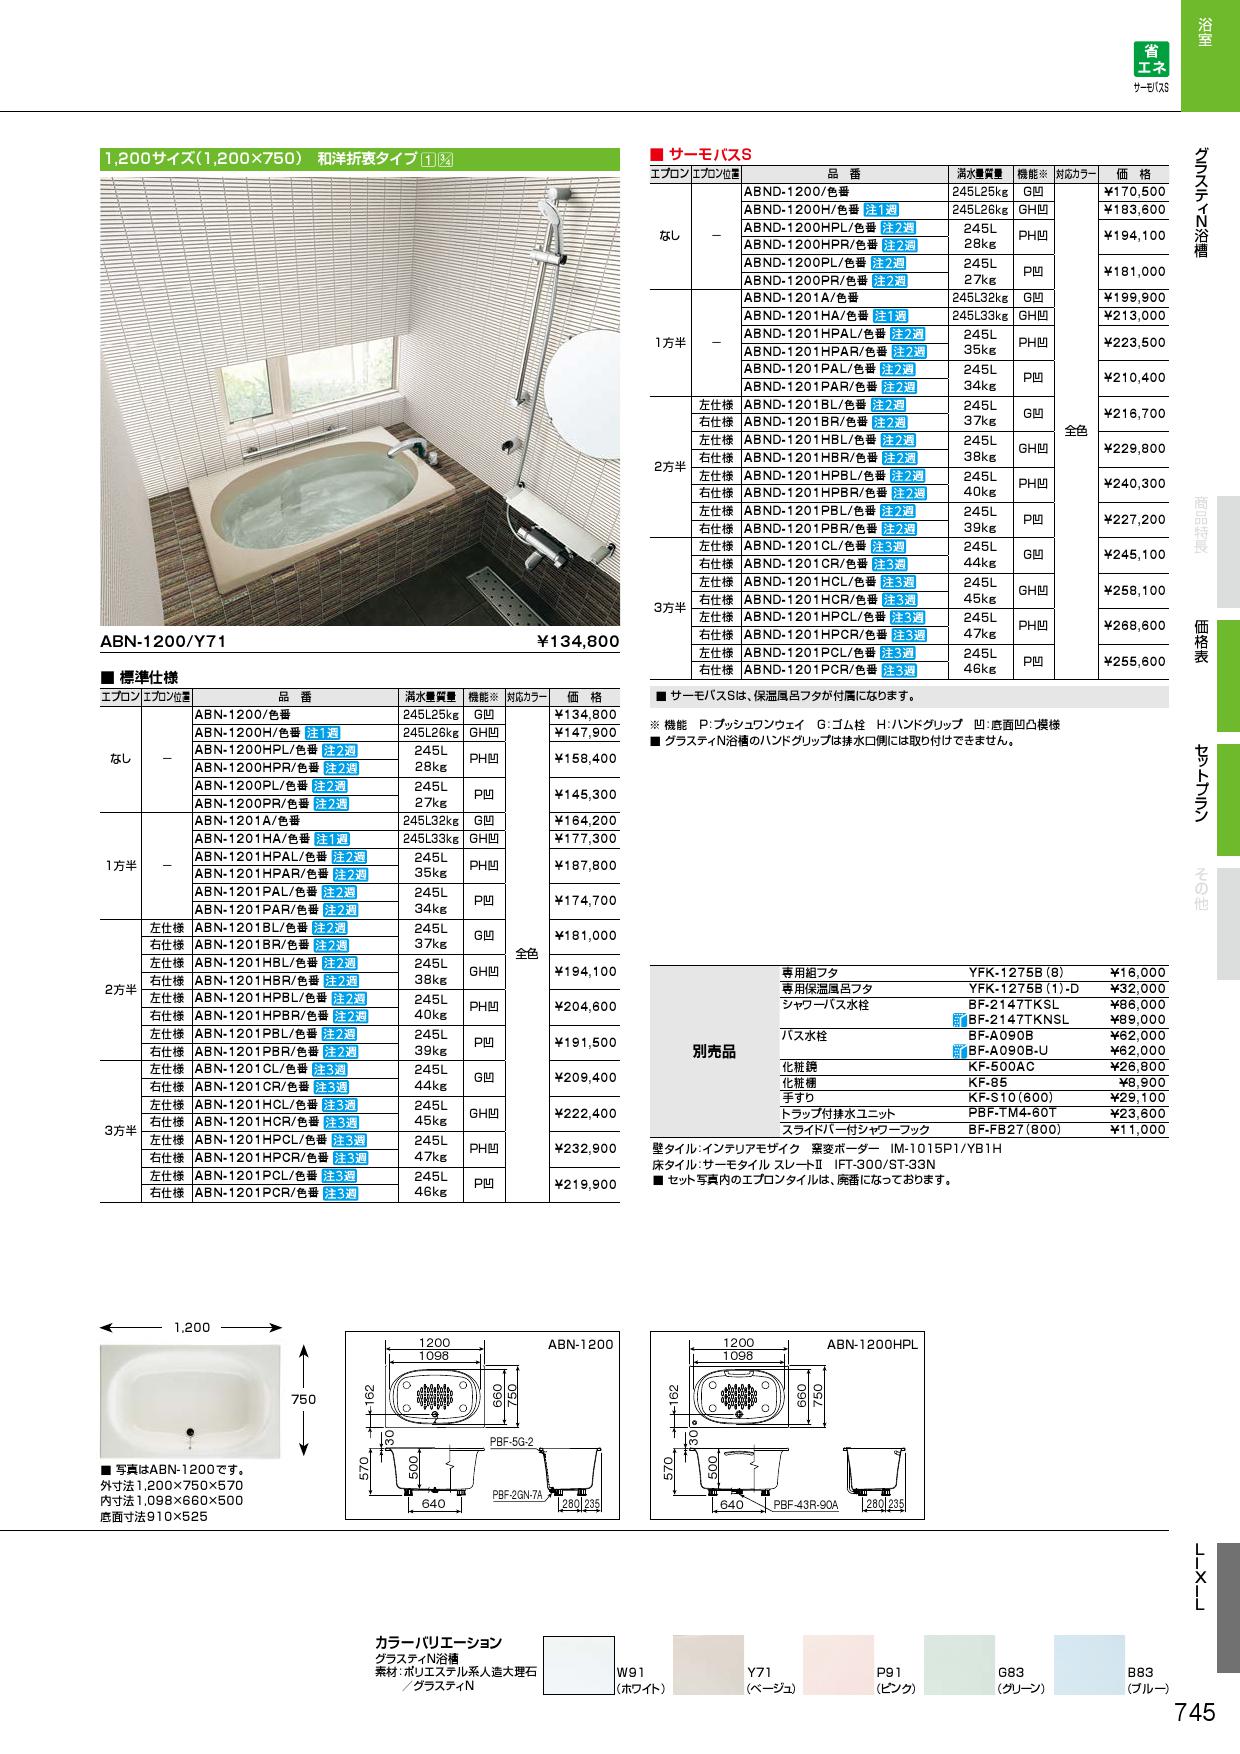 ABN-1201PBL】 リクシル グラスティN浴槽(二方半エプロン) яз∠ abn-1201pbl アールホームマート !店  通販 